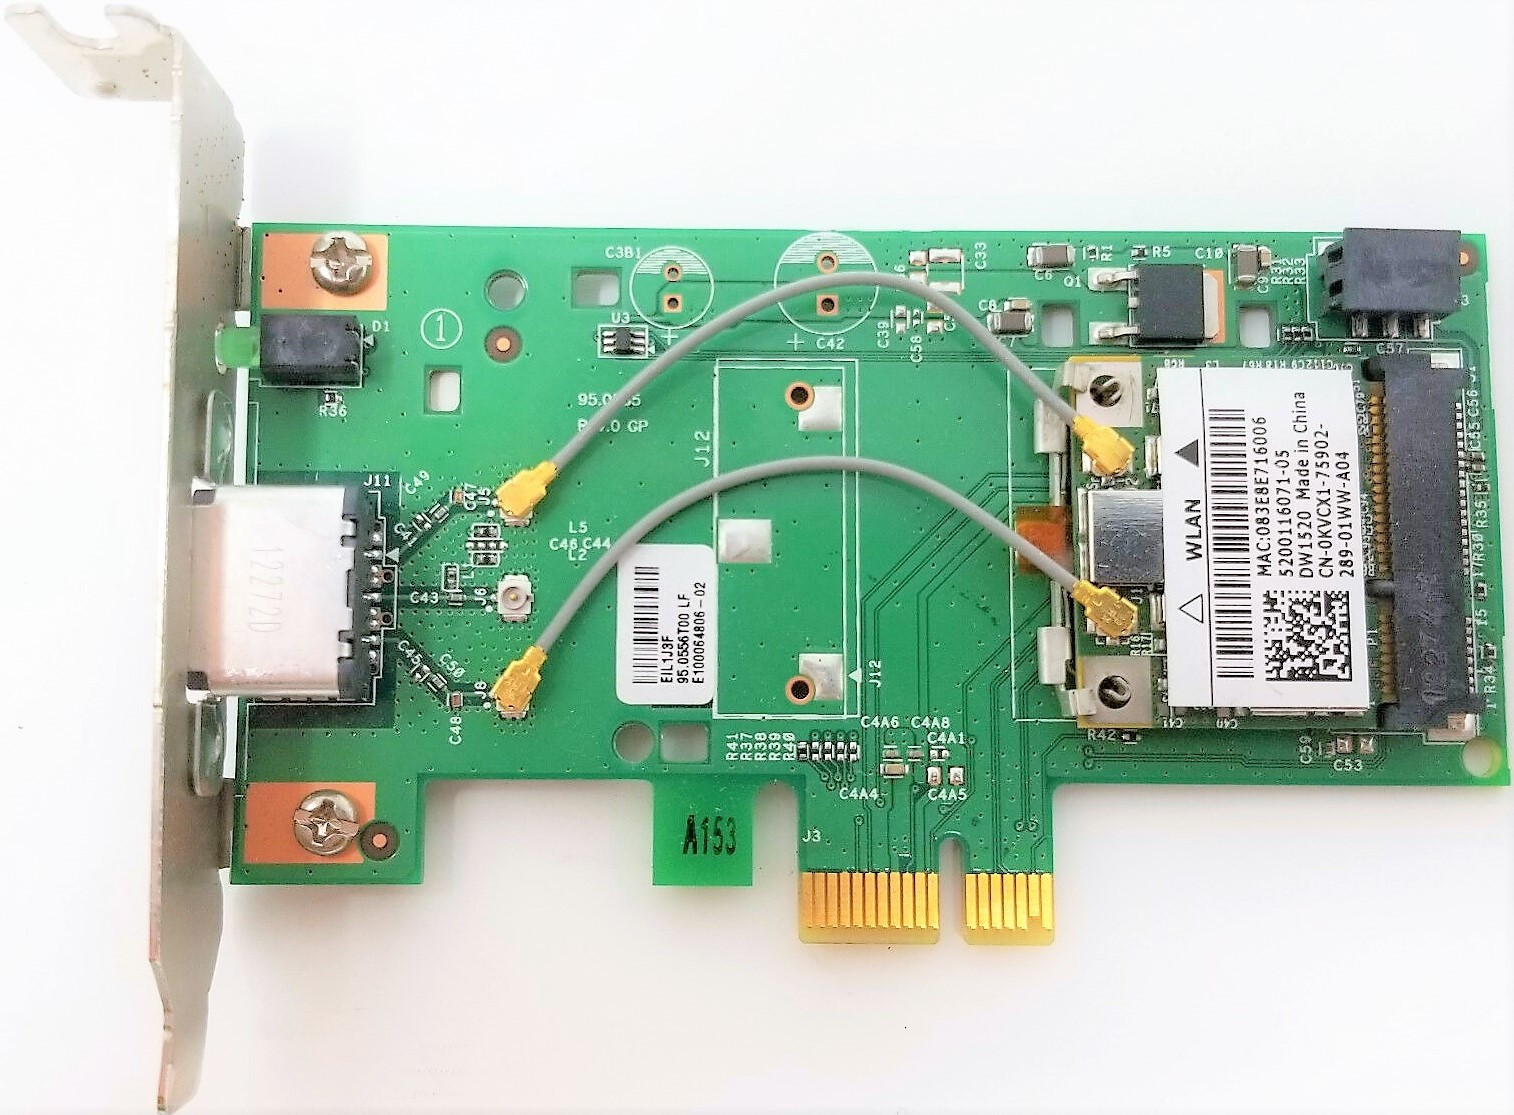 Dell DW1520 802.11 a/g/n Wireless Card - PCIe-x1 LP